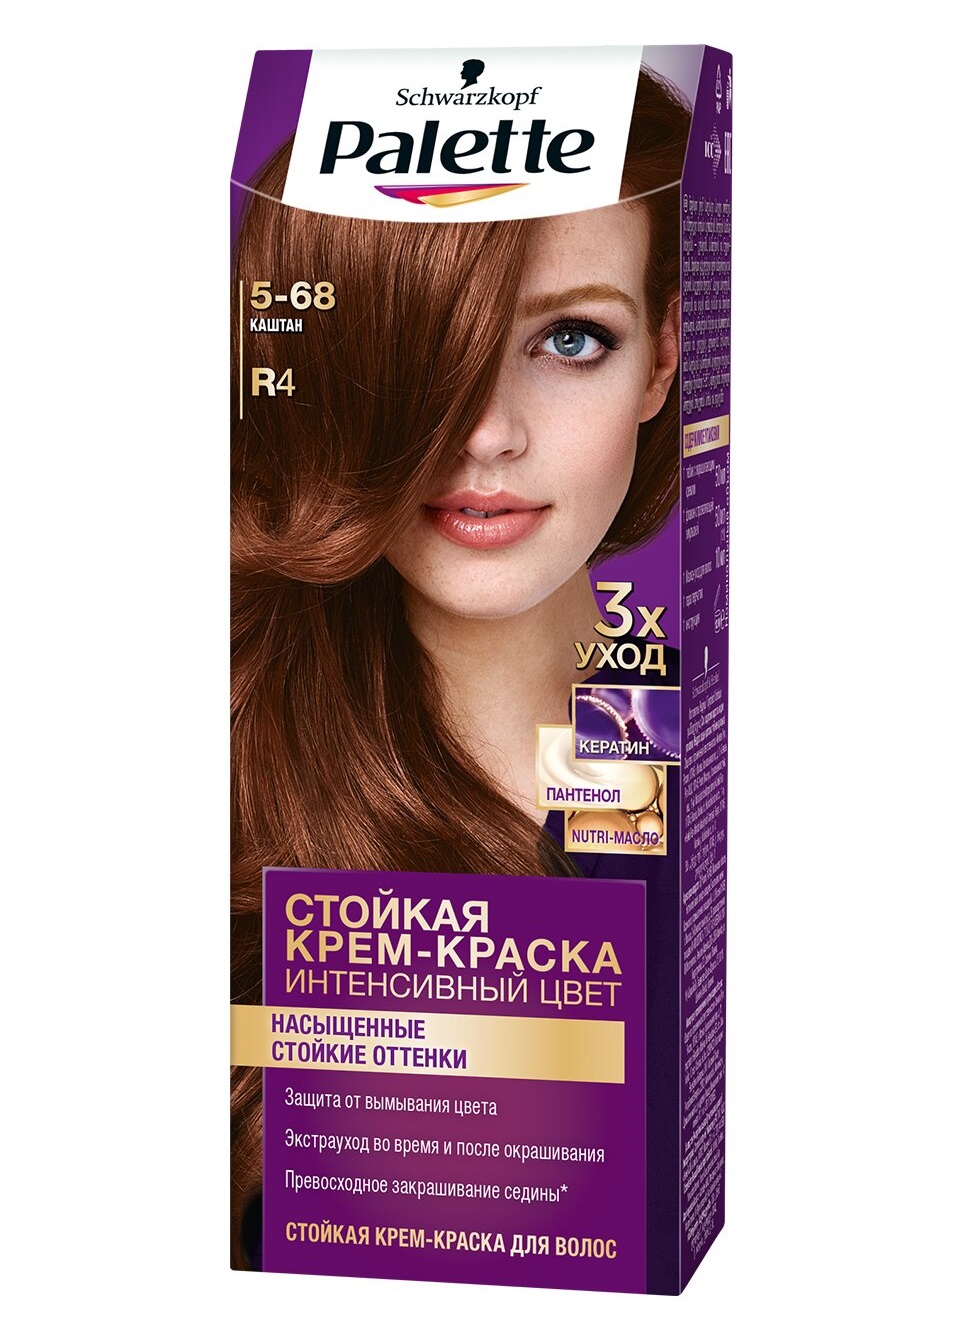 Крем-краска для волос Palette Интенсивный цвет 5-68 R4 Каштан 110 мл краска j maki 12 77 суперблонд интенсивный фиолетовый 60 мл